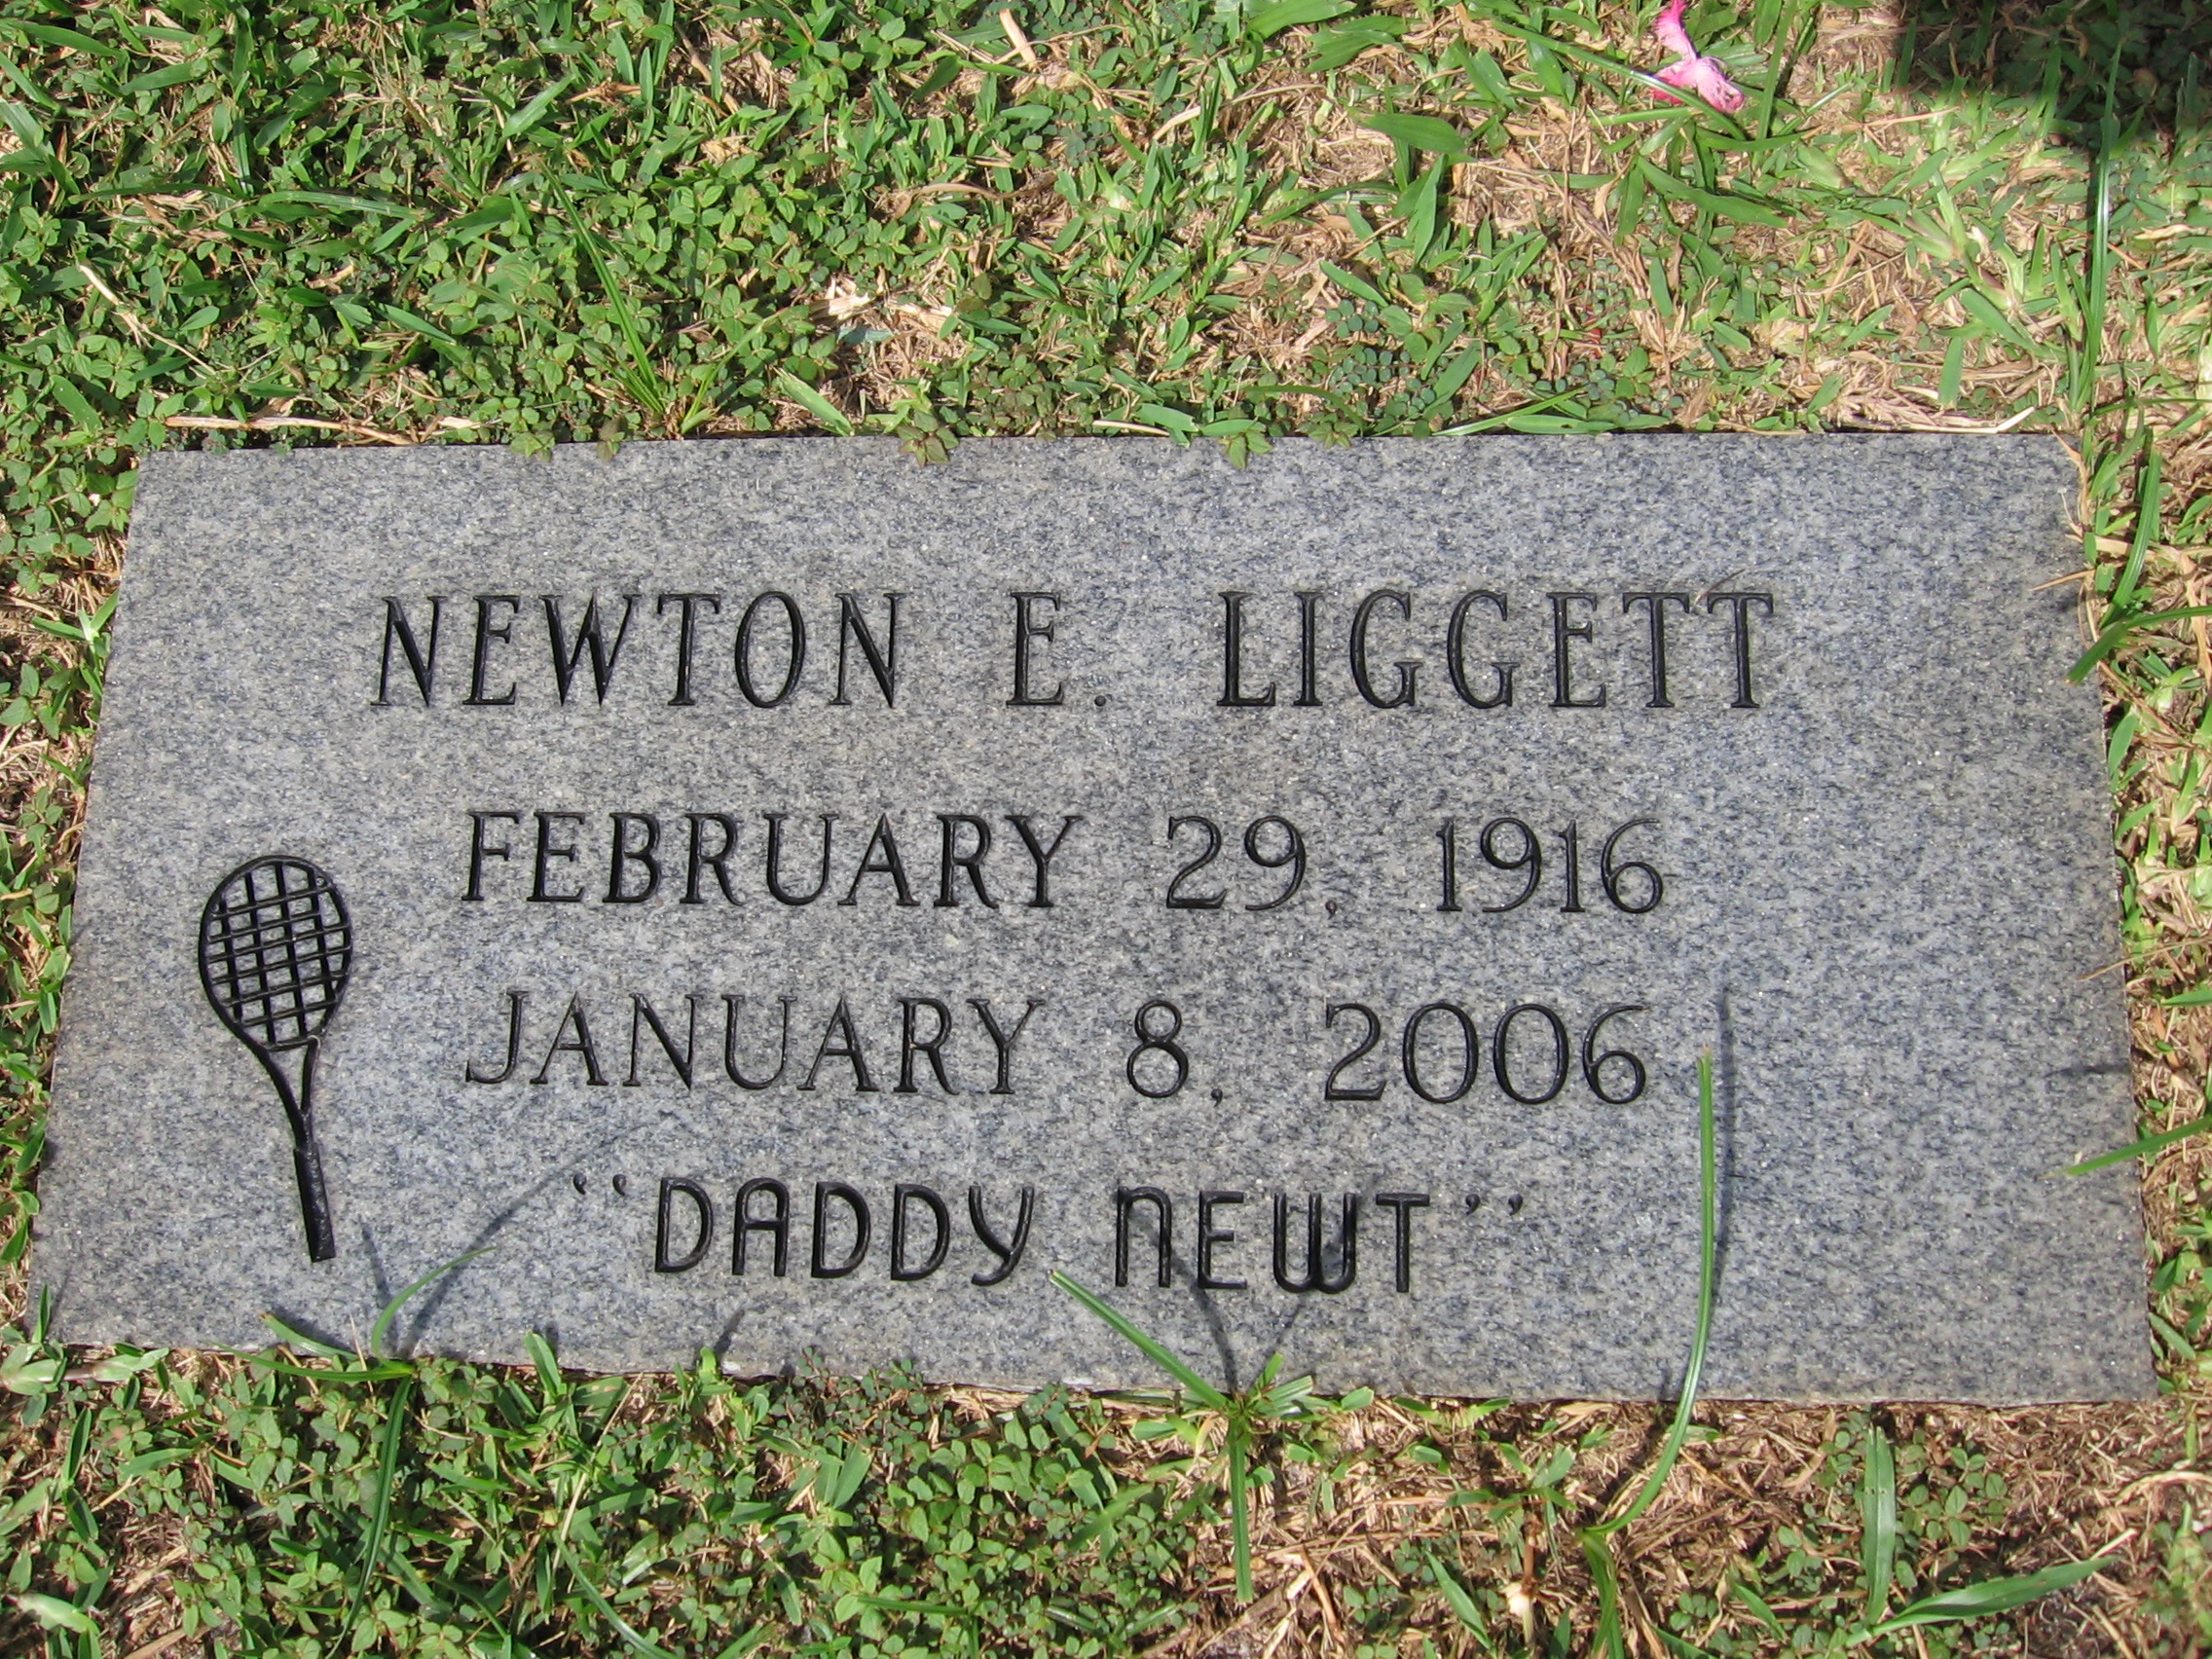 Newton E "Daddy Newt" Liggett